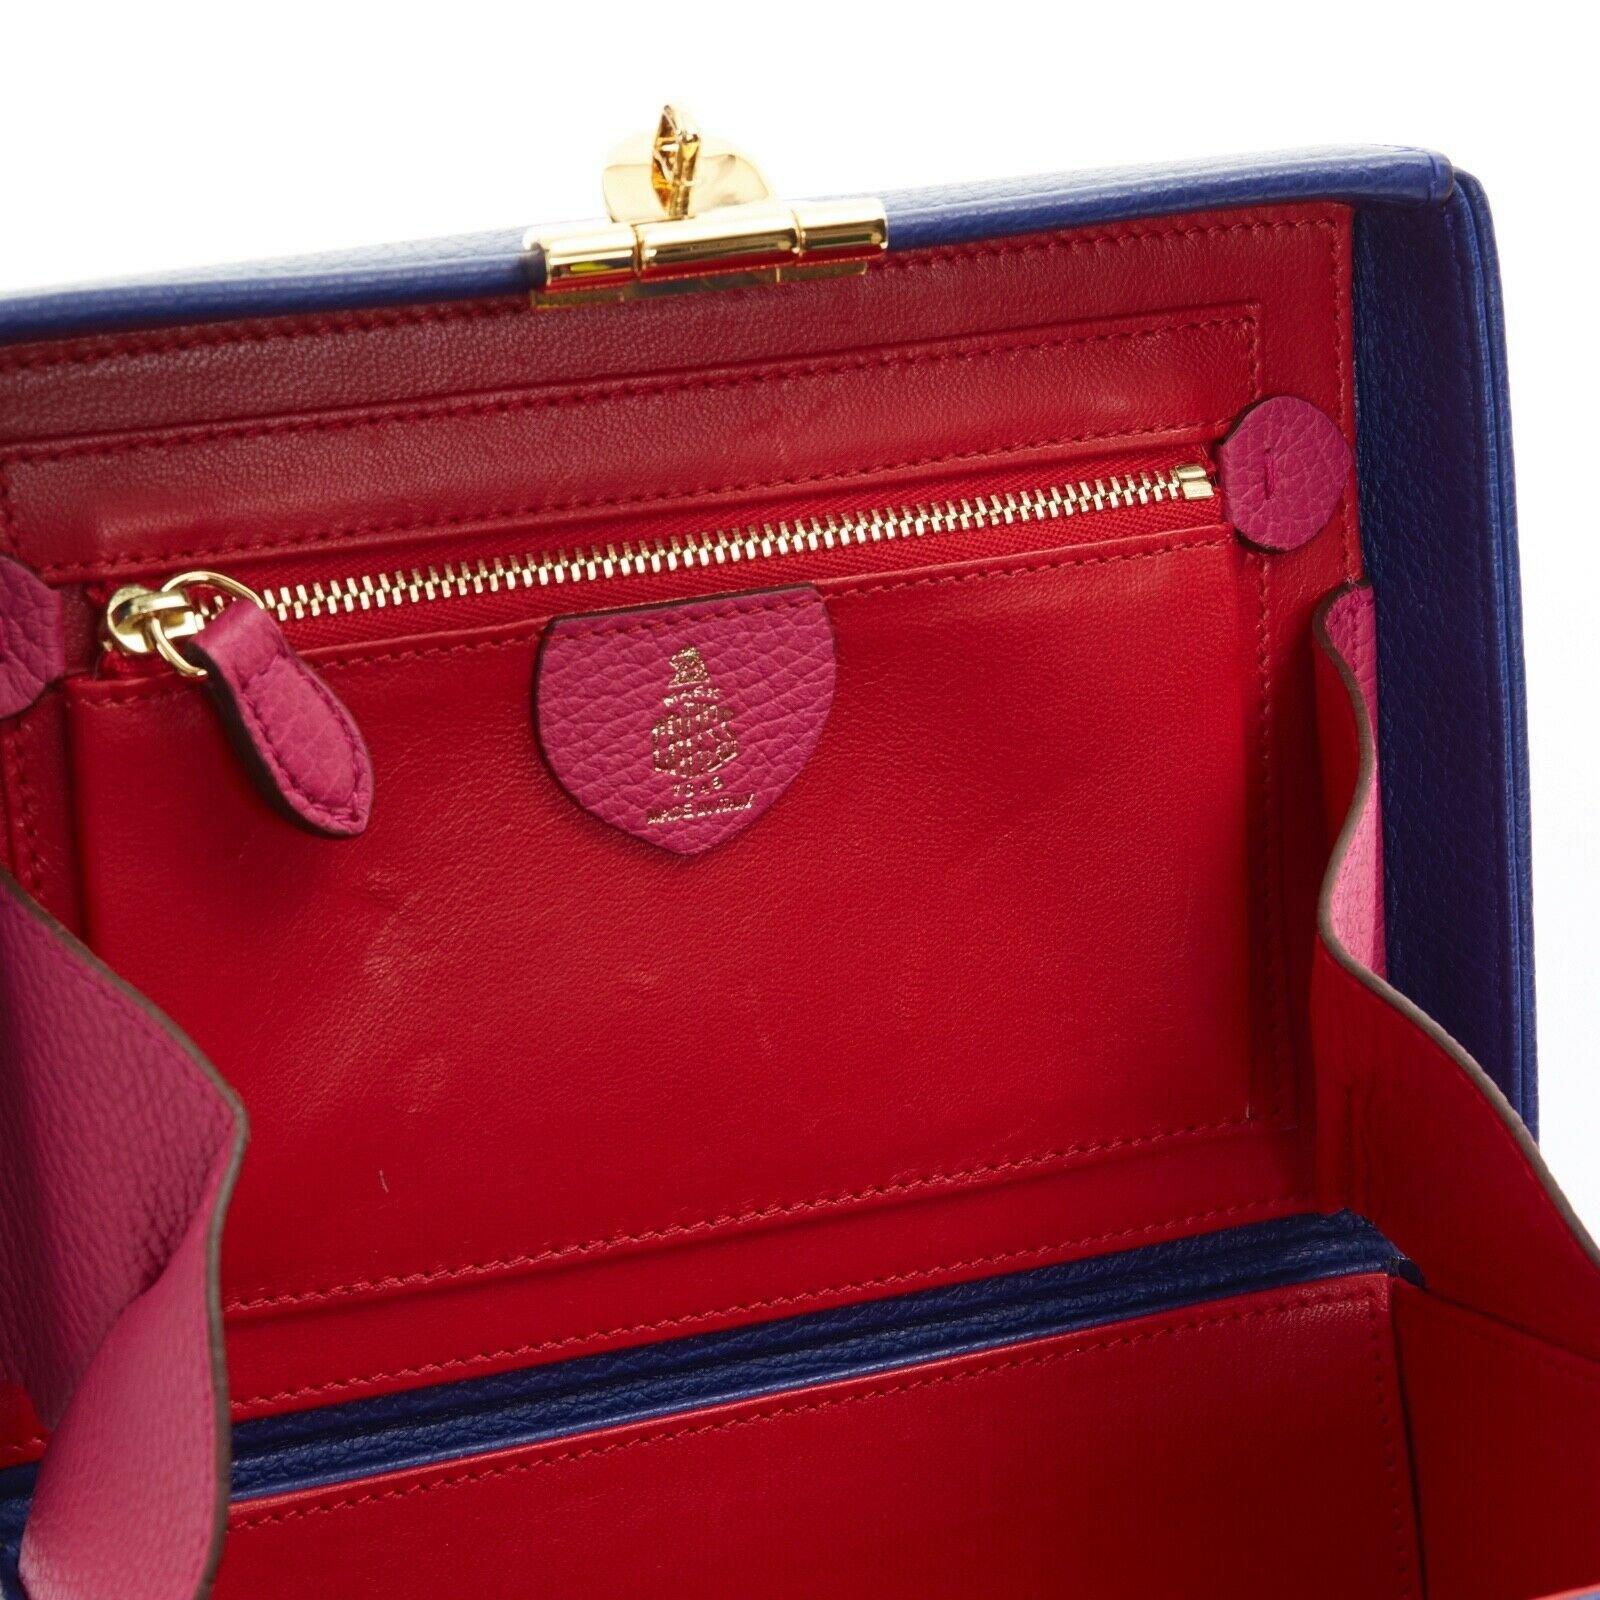 MARK CROSS Grace Box blue purple leather gold lock medium shoulder trunk bag 5